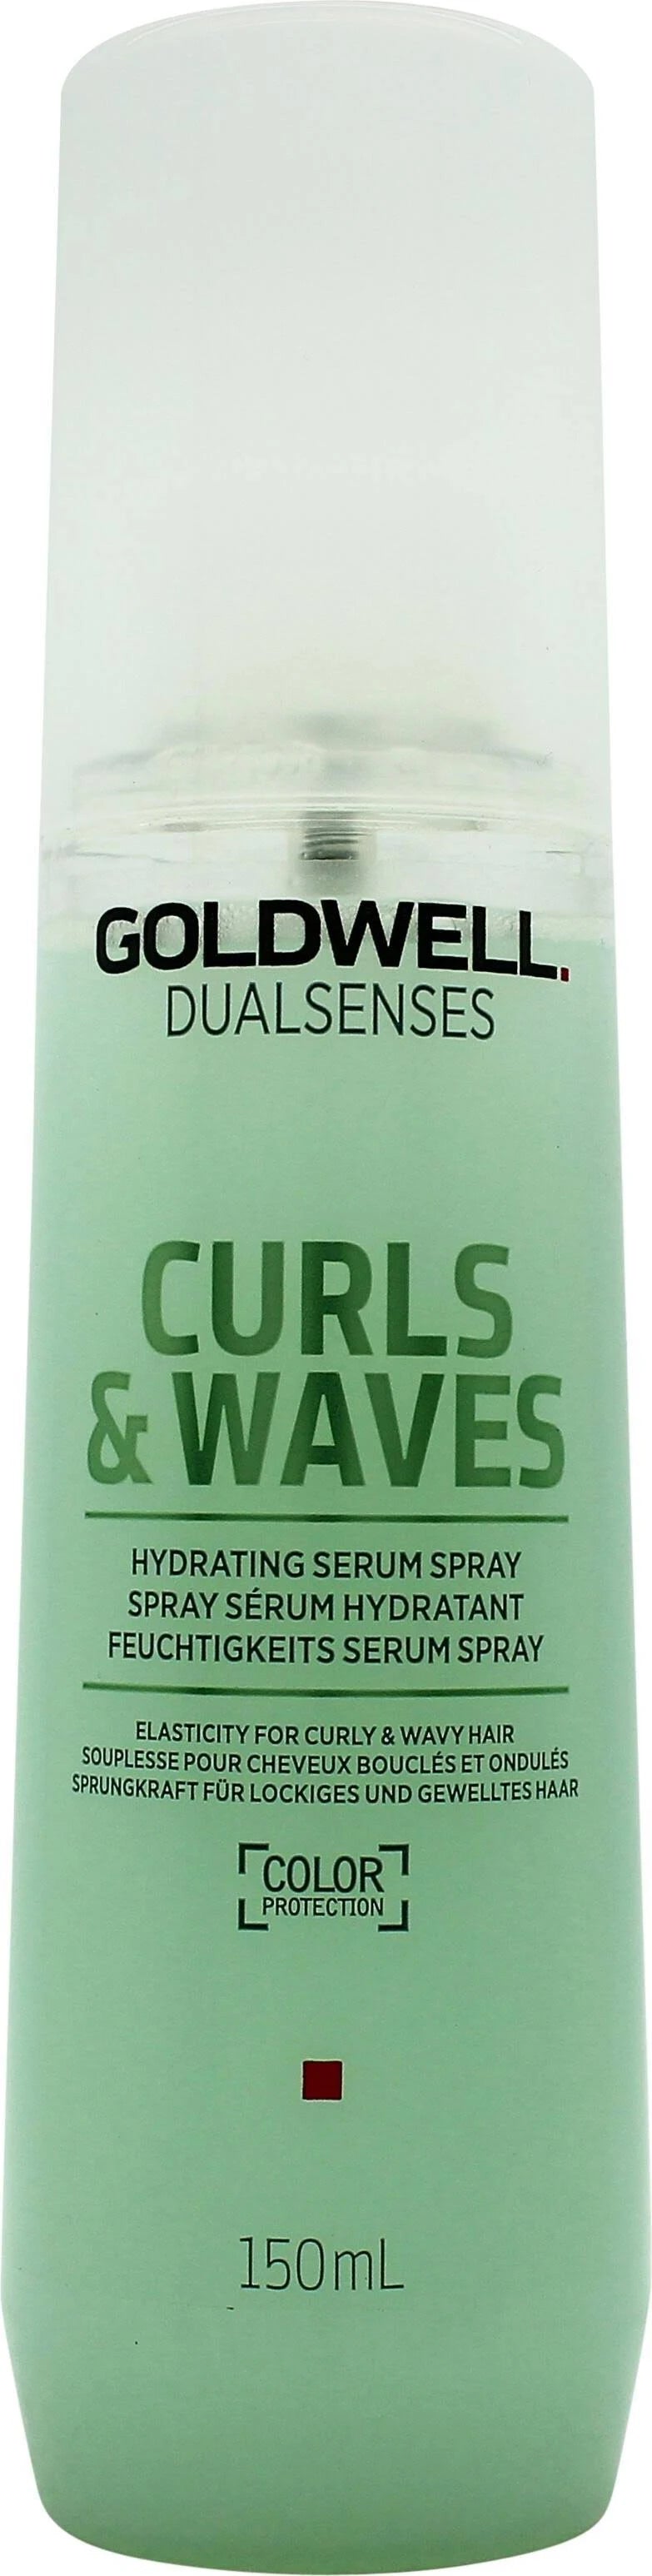 Dualsenses Curls & Waves Serum Spray Image